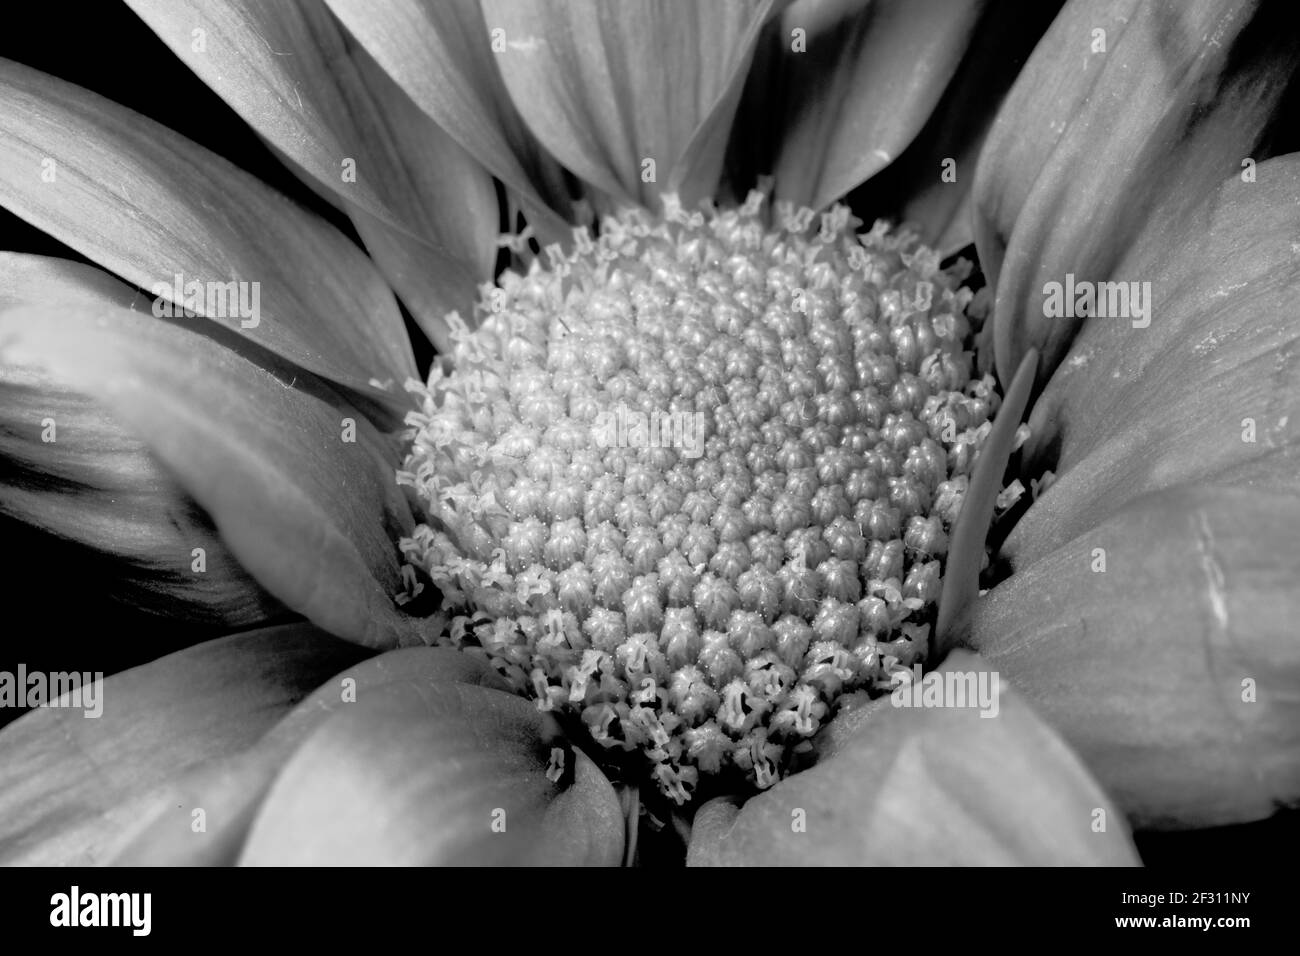 Chrysanthemum Black and White Stock Photos & Images - Alamy